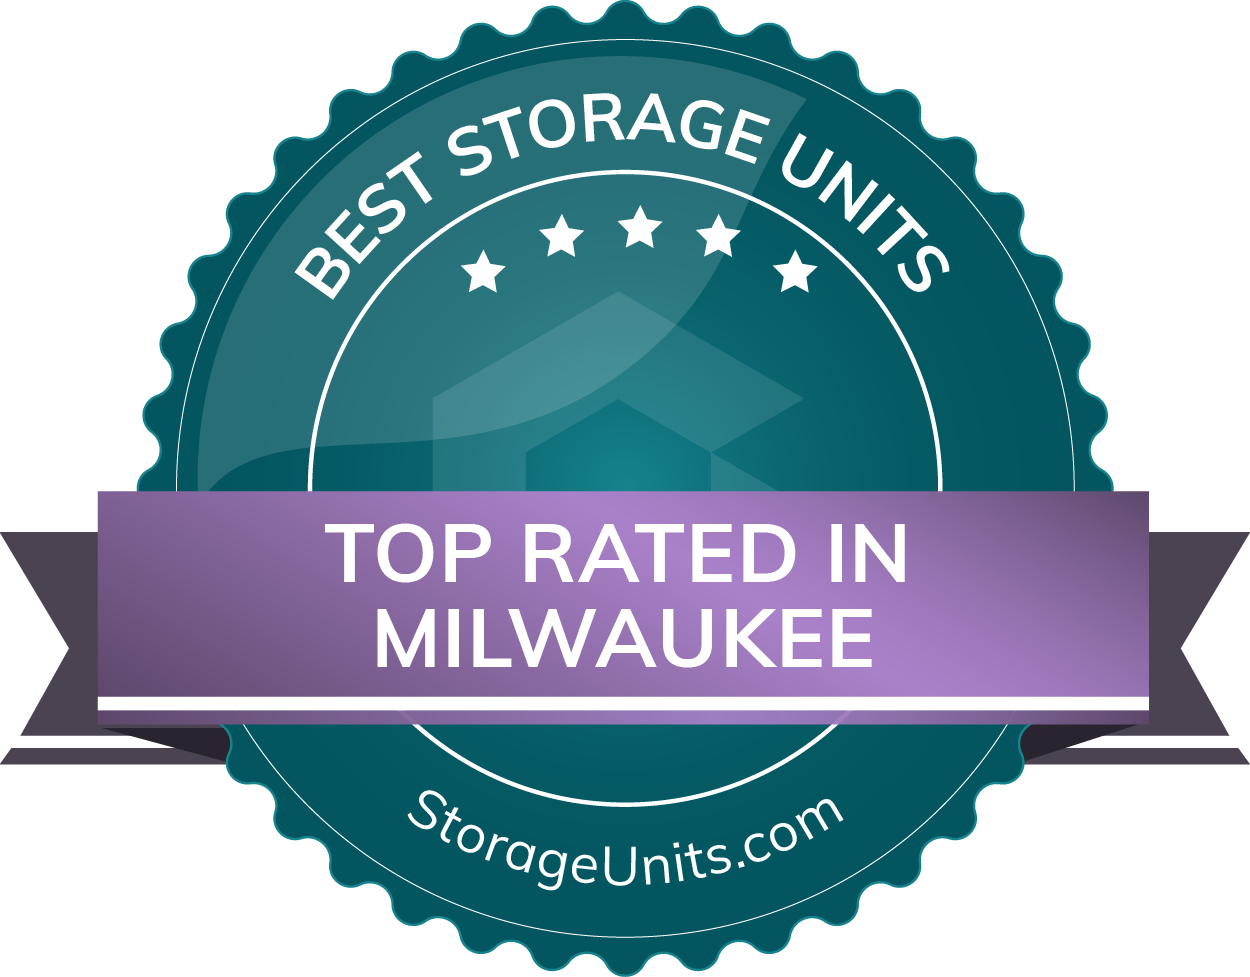 Best Self Storage Units in Milwaukee, Wisconsin of 2022